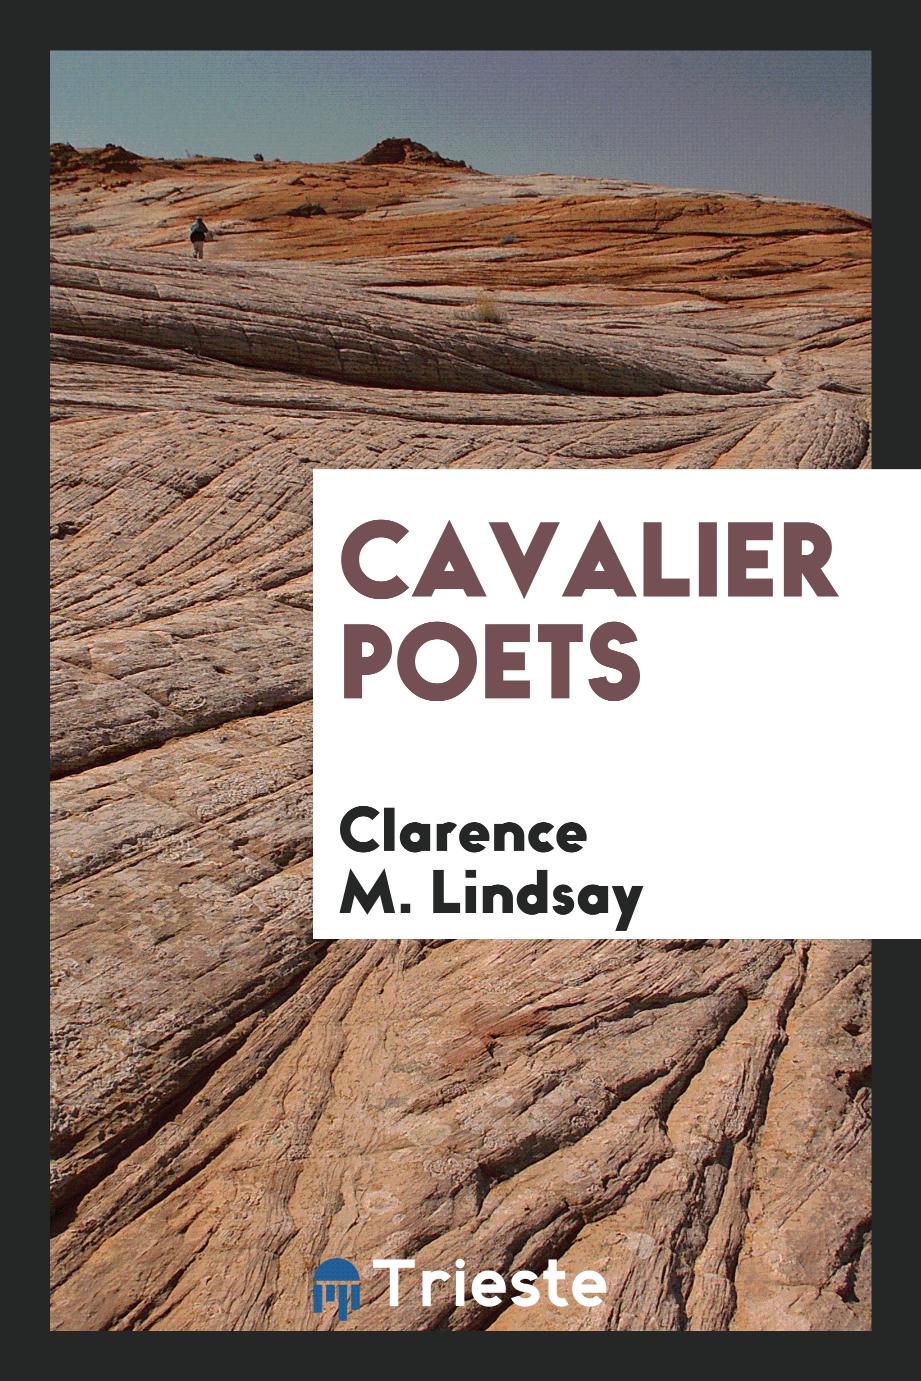 Cavalier poets